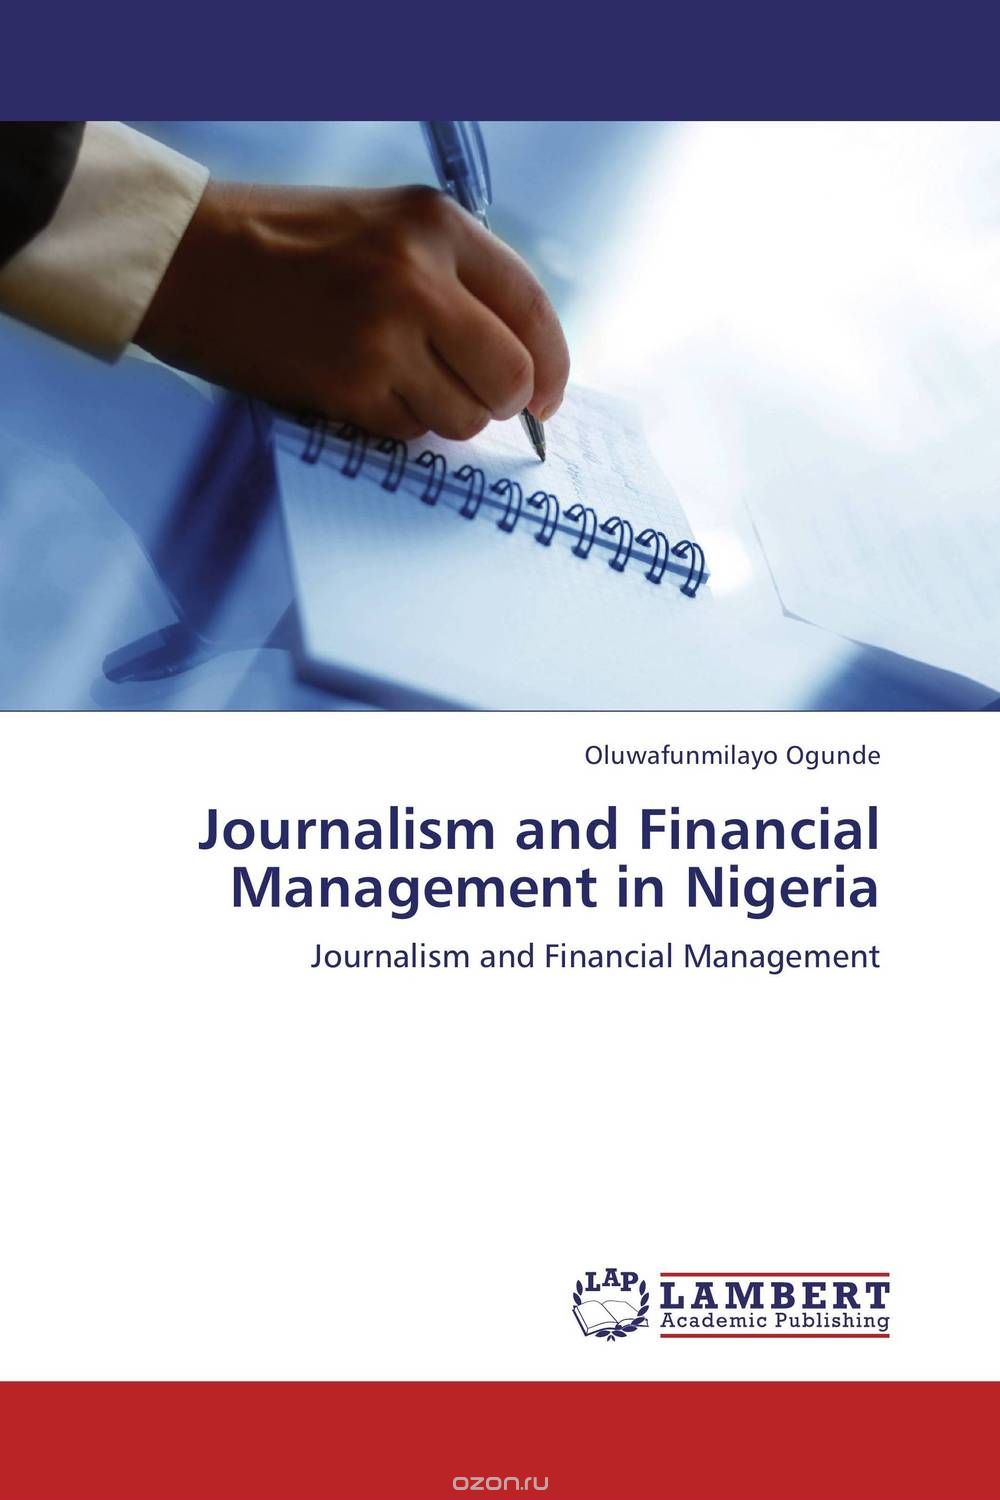 Скачать книгу "Journalism and Financial Management in Nigeria"